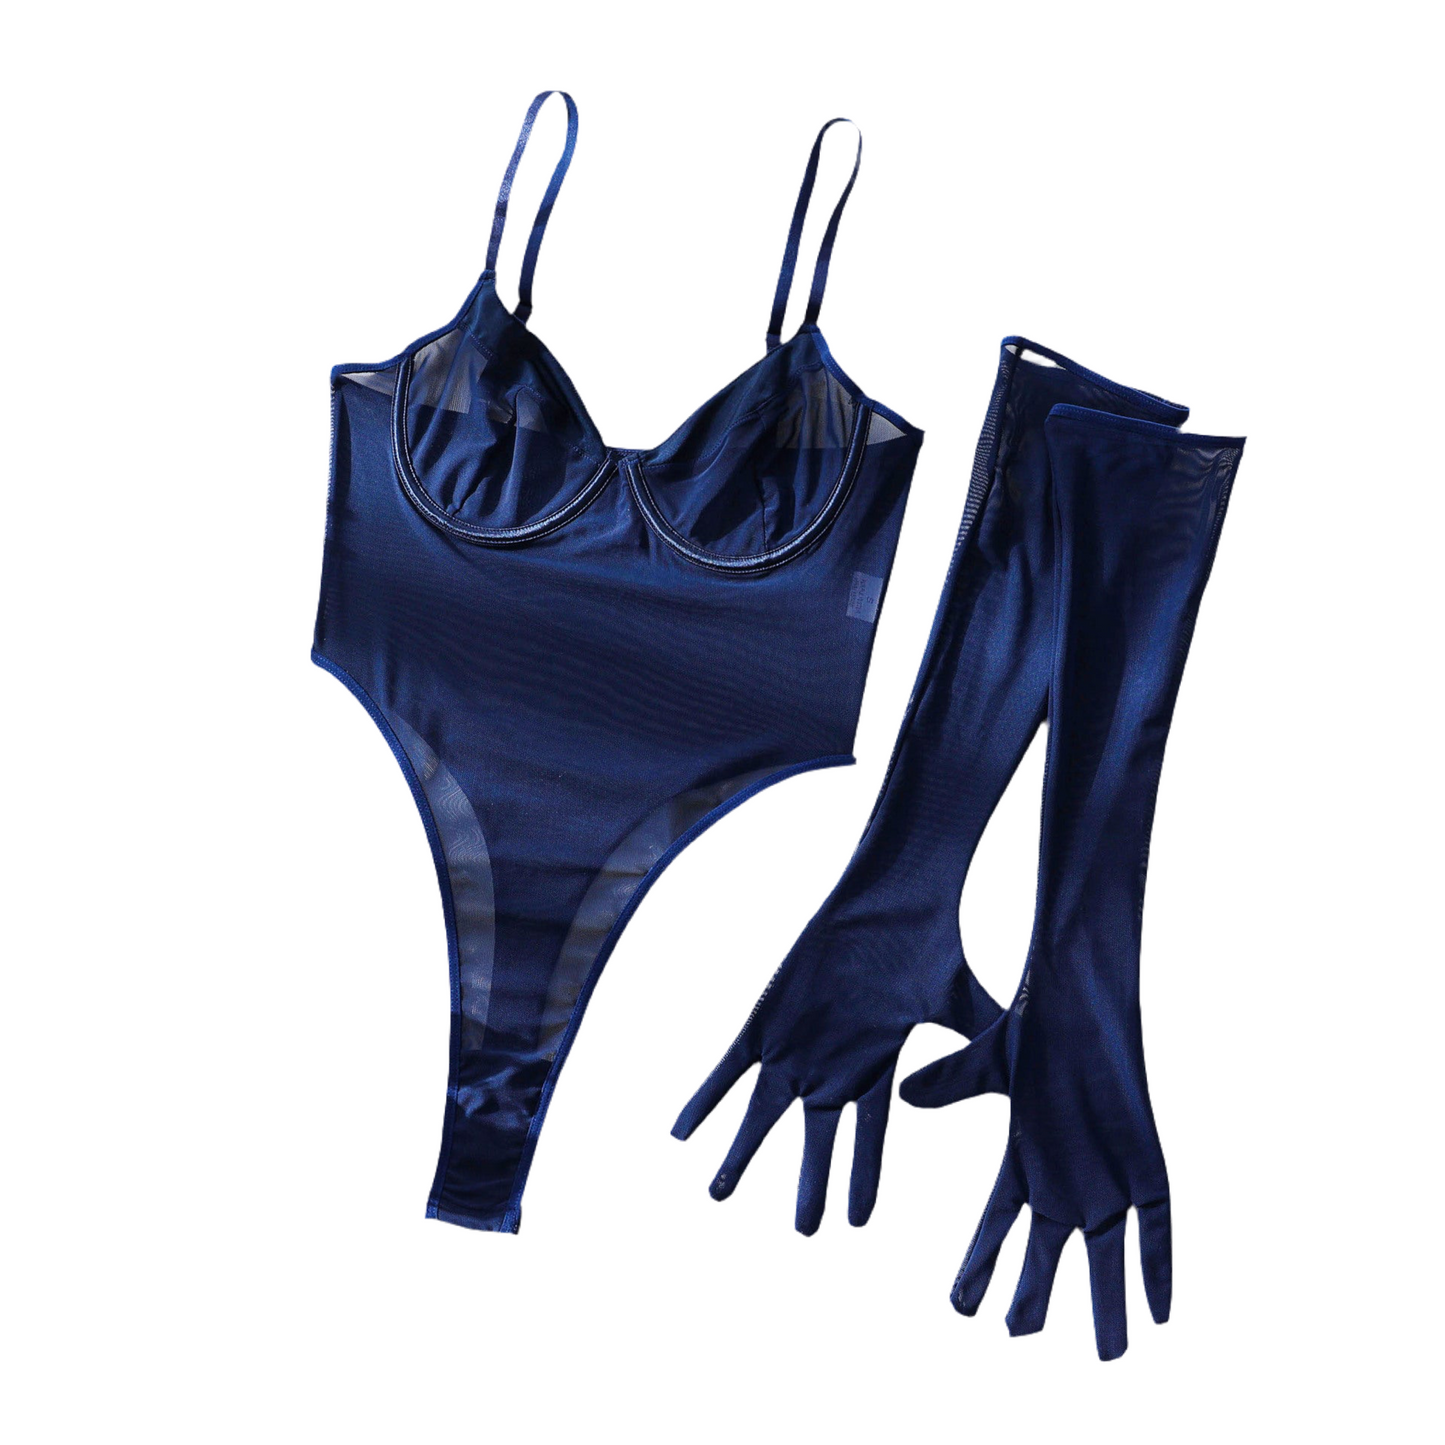 Bodysuit and Glove set